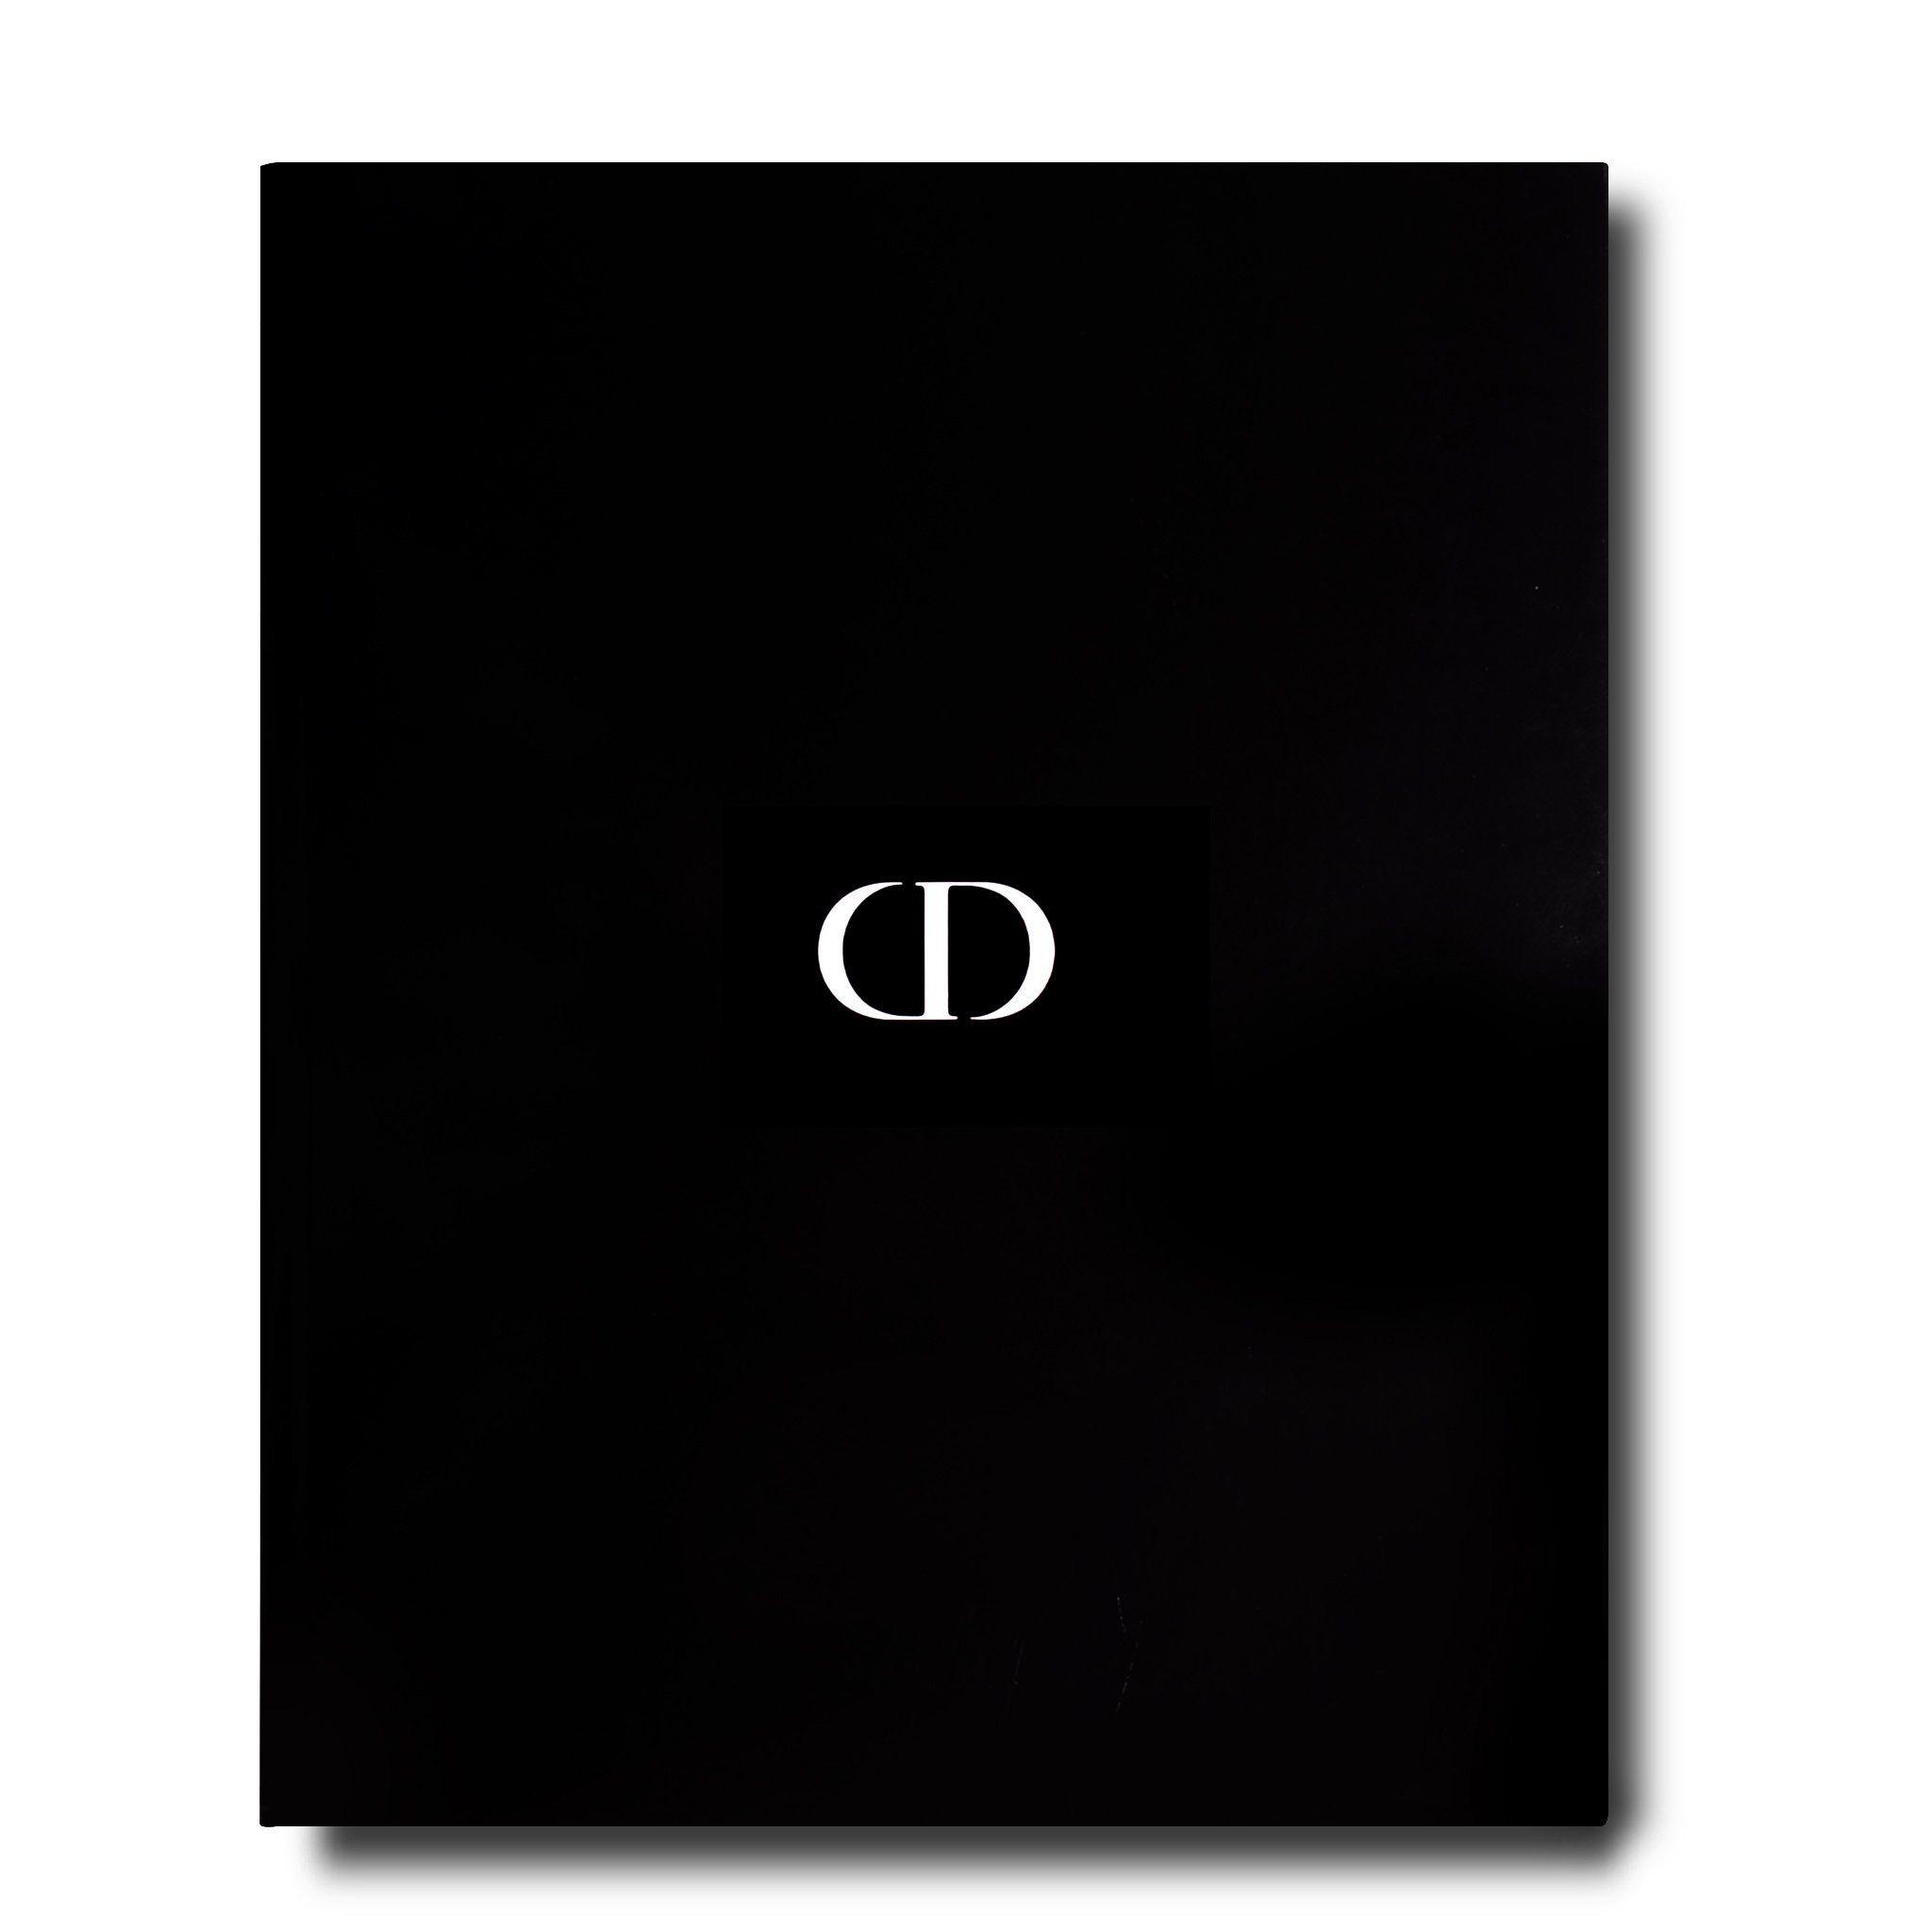 Christian Dior Logo - Dior by Christian Dior book by Olivier Saillard | ASSOULINE